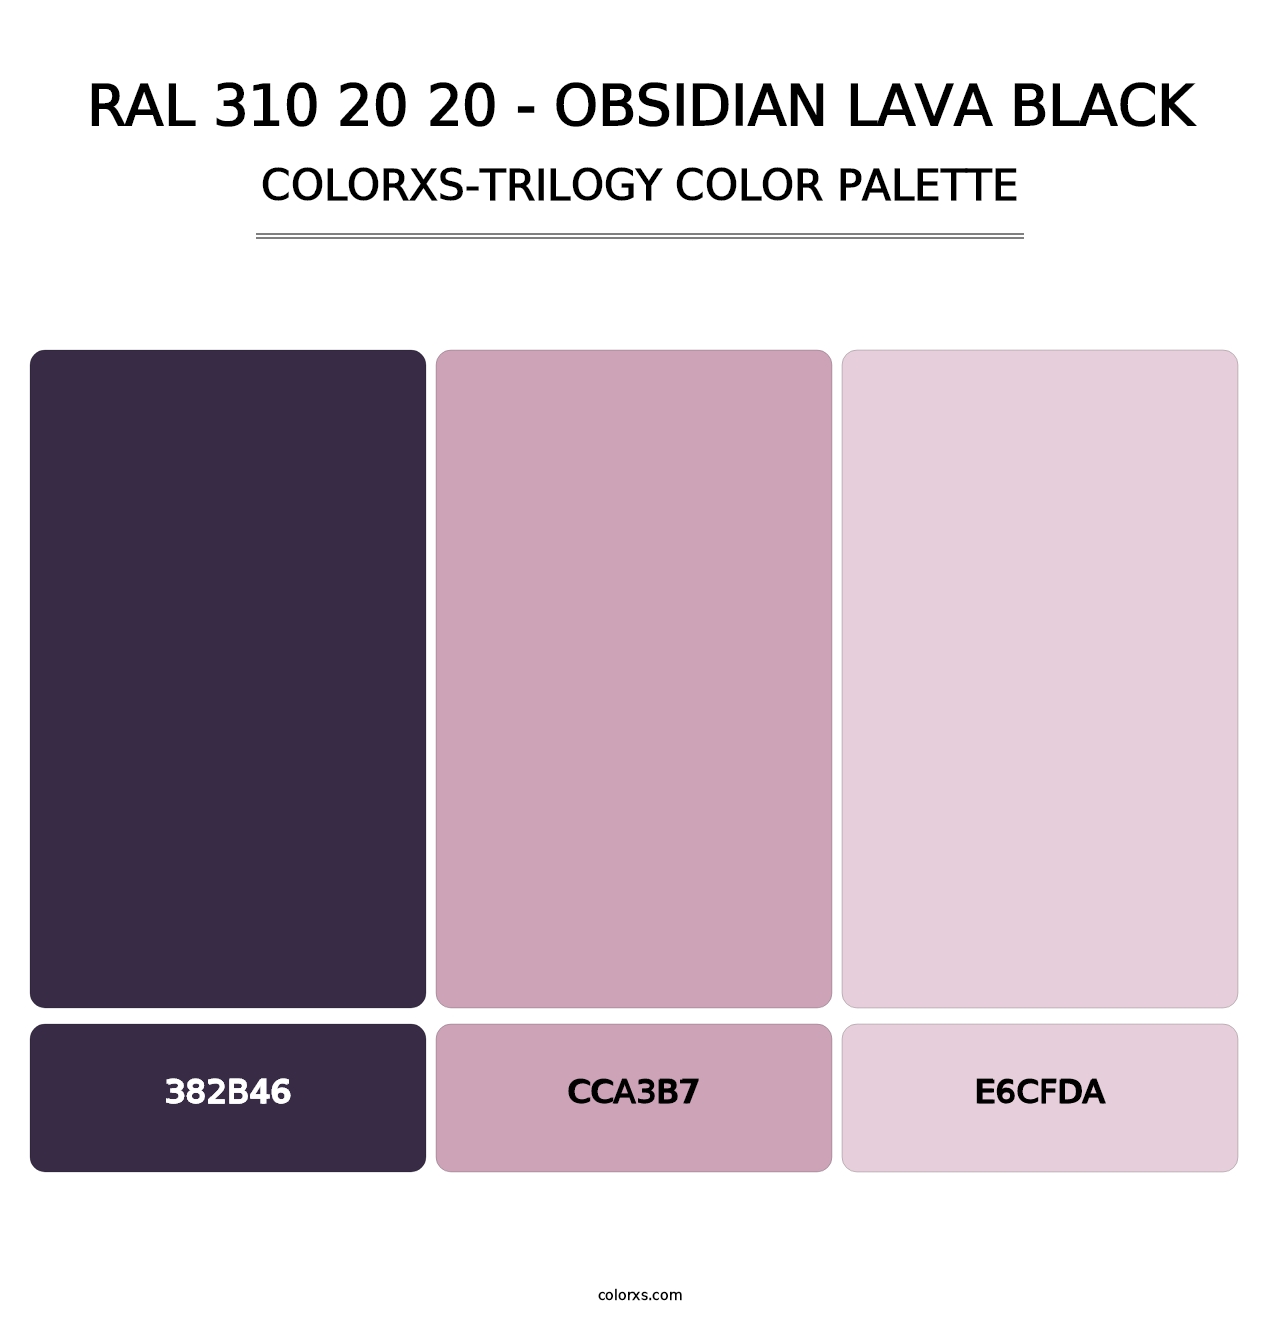 RAL 310 20 20 - Obsidian Lava Black - Colorxs Trilogy Palette